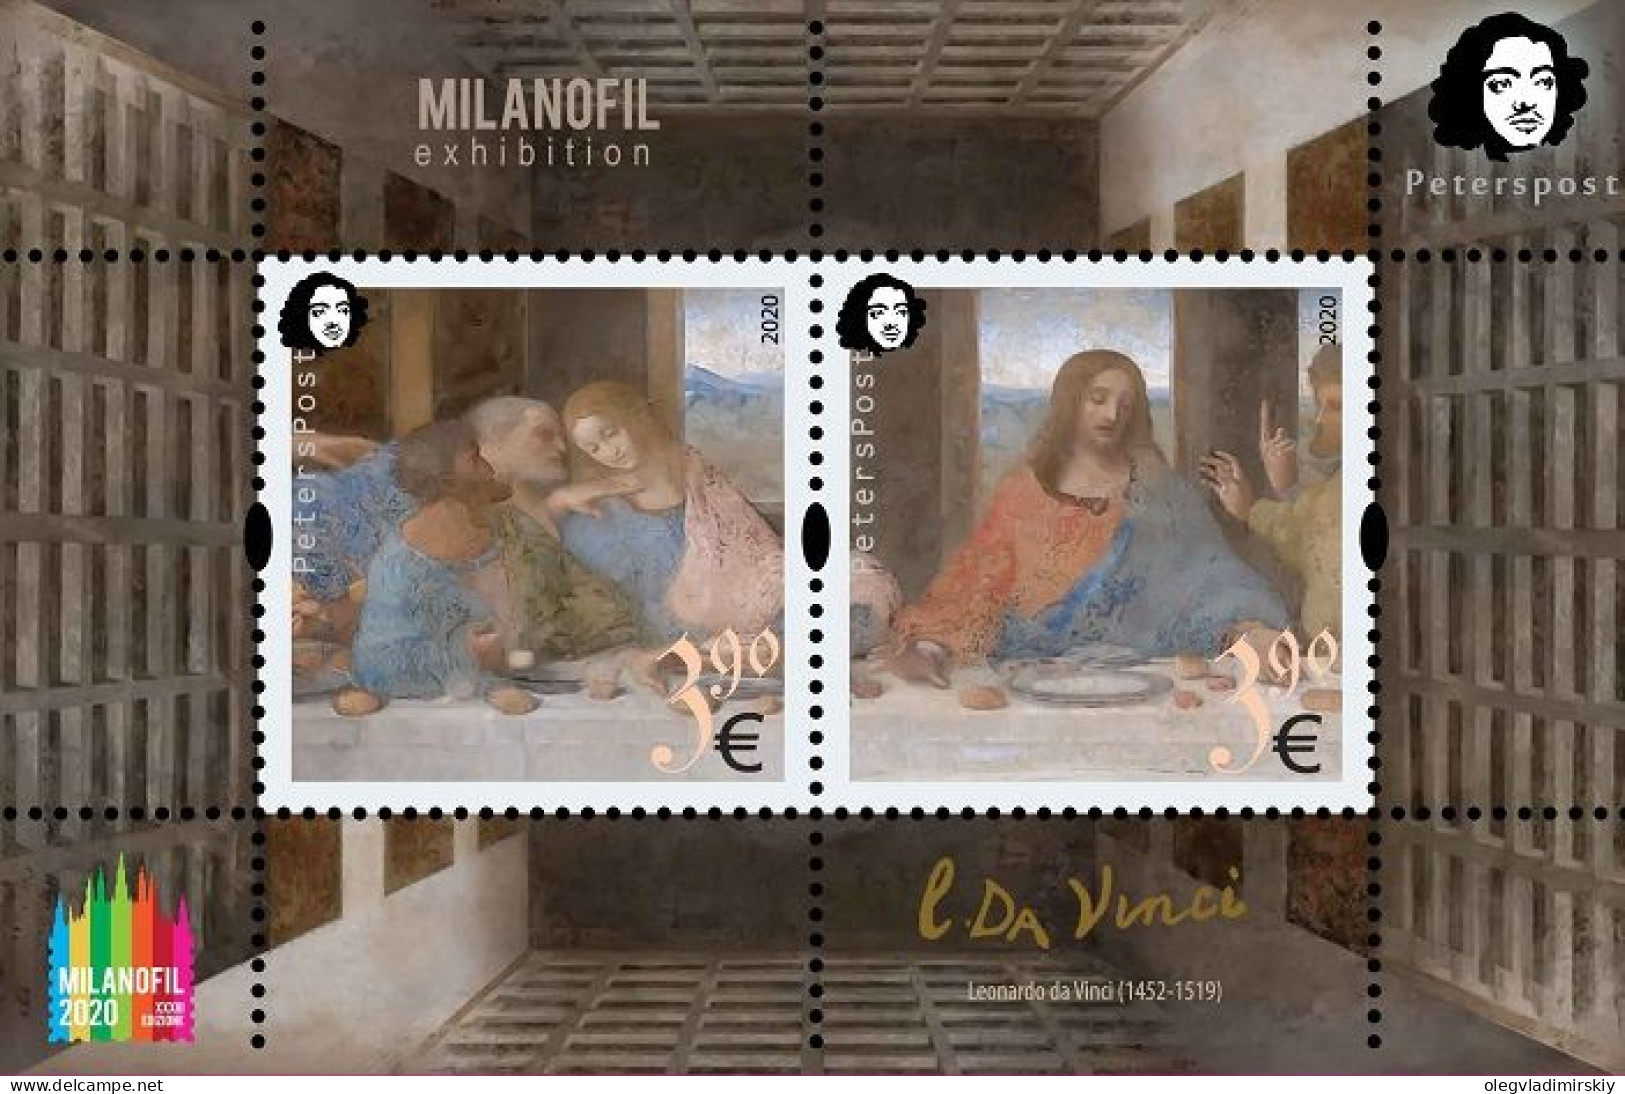 Finland 2020 Leonardo Da Vinci 500 Years From The Date Of Death "The Lord's Supper" MILANOFIL-2020 Peterspost Block MNH - Blocks & Kleinbögen